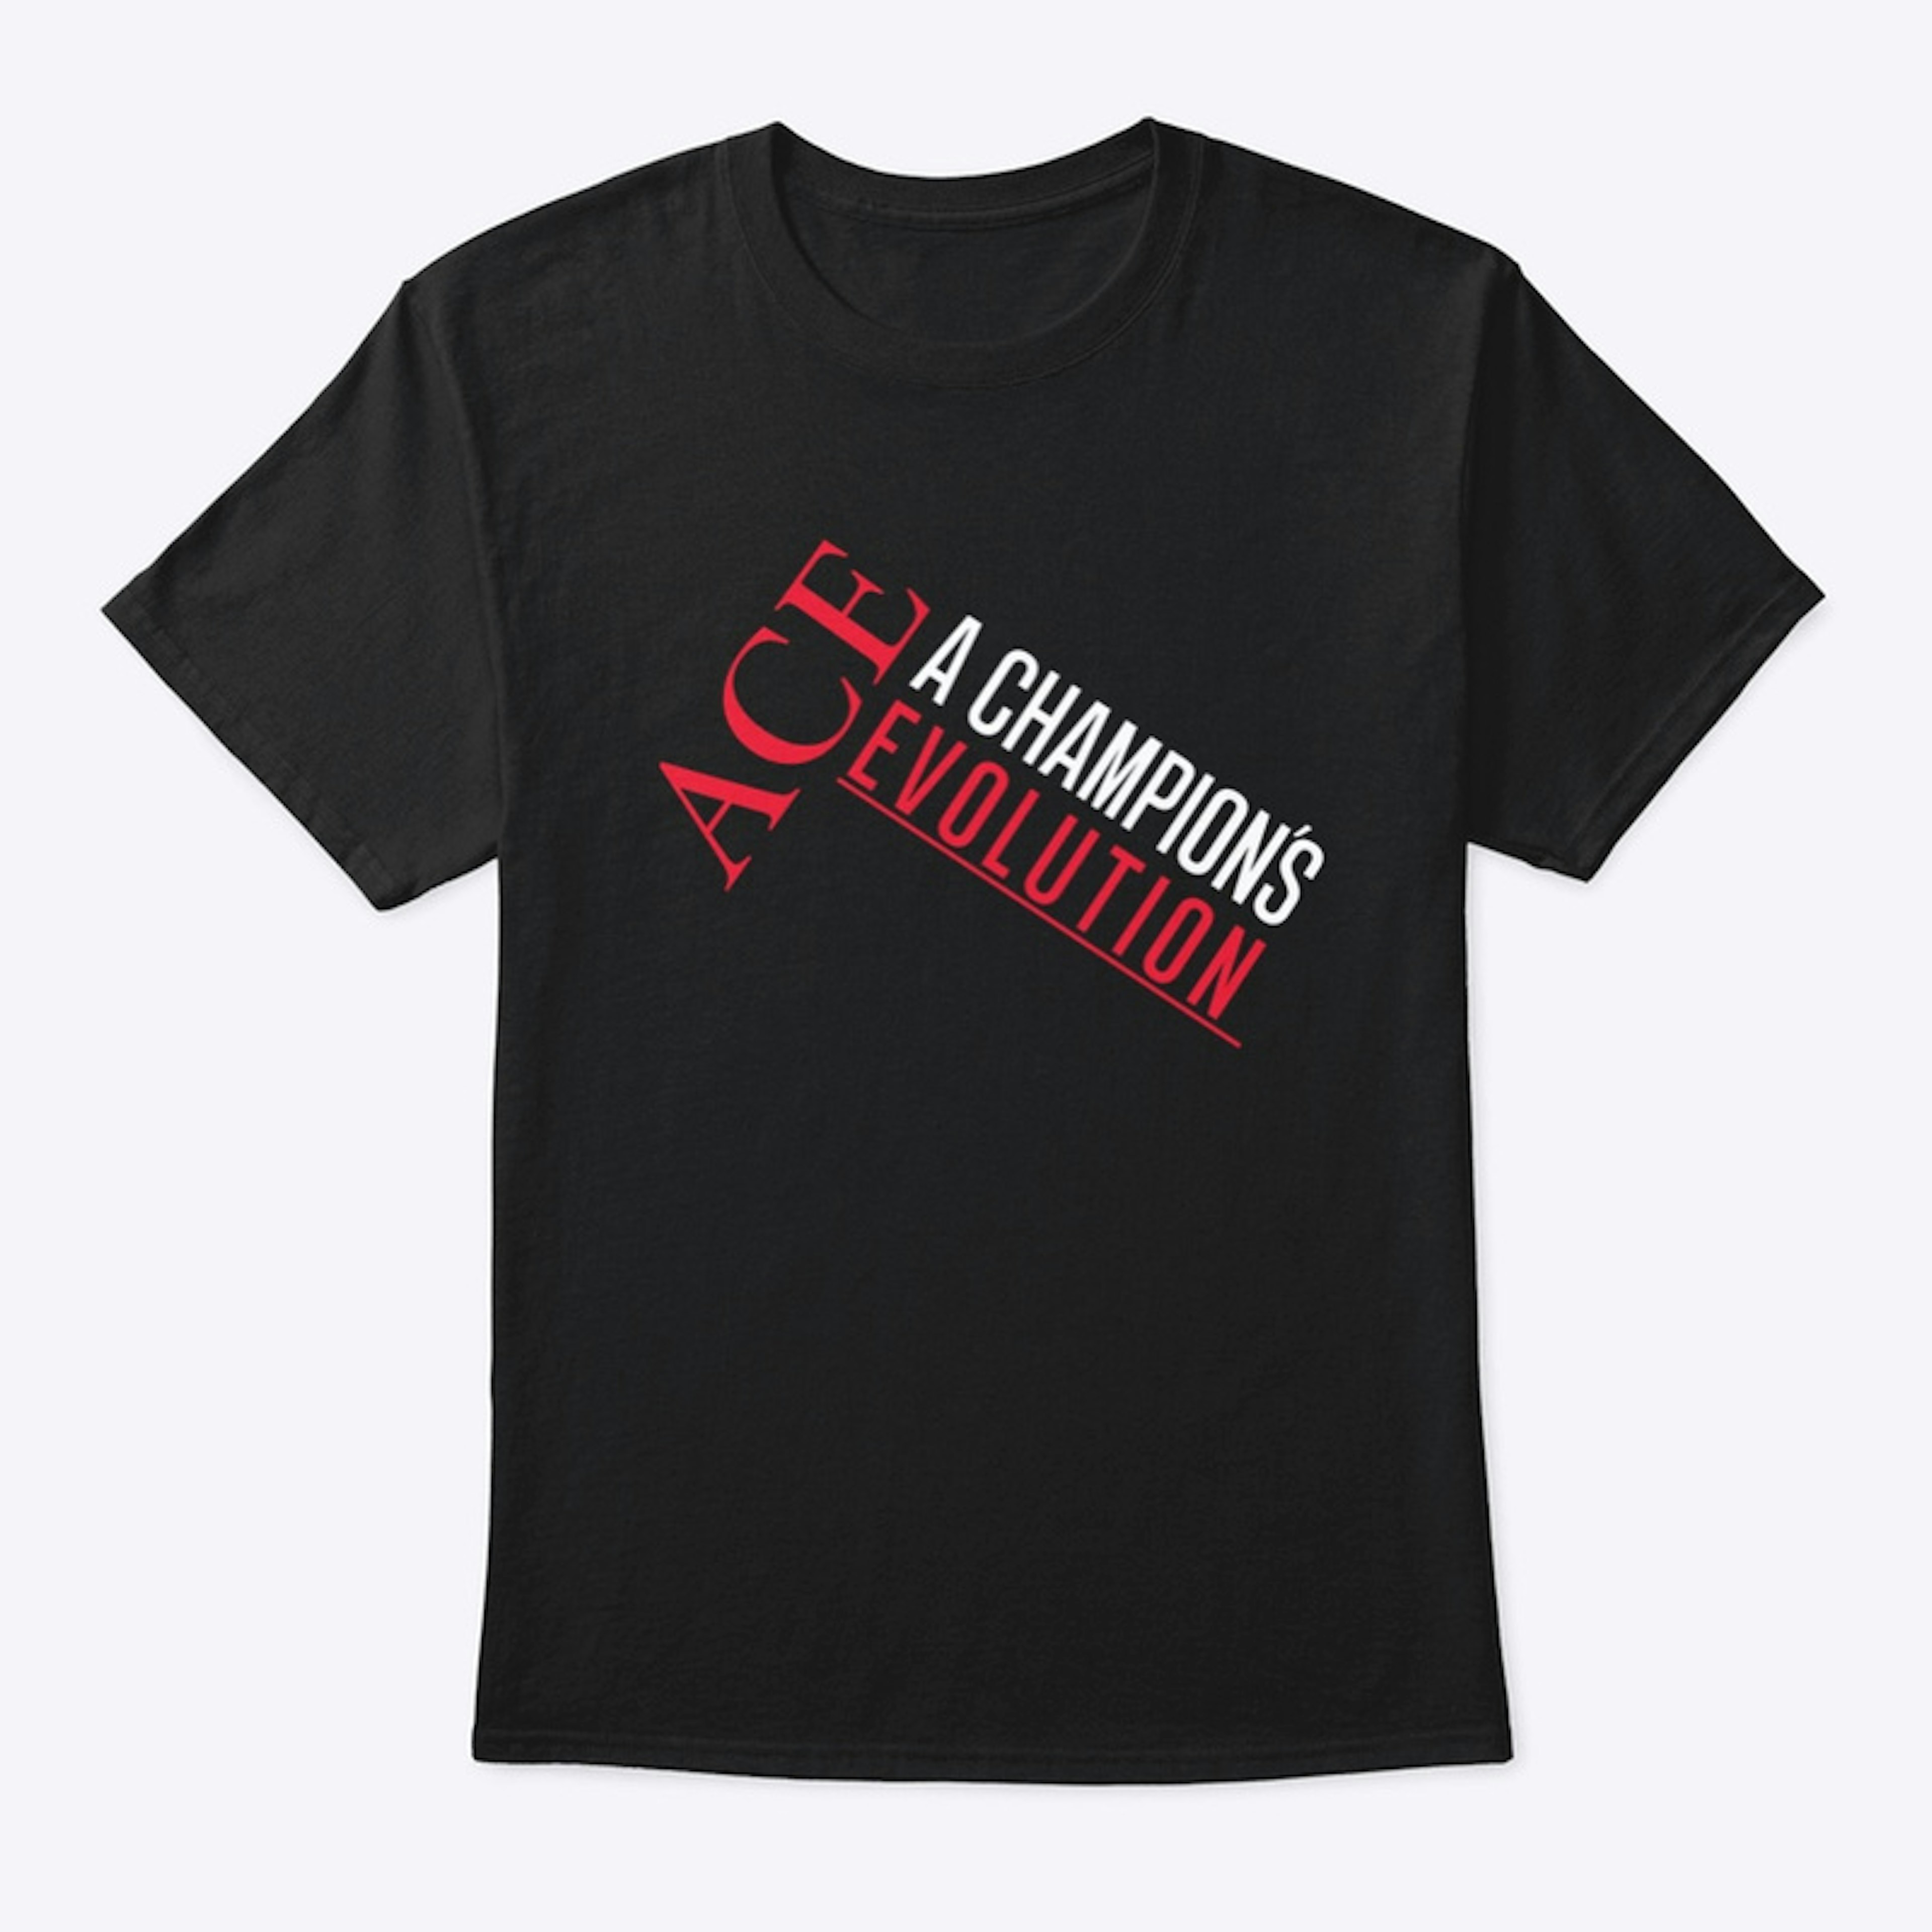 A Champion's Evolution - clothing